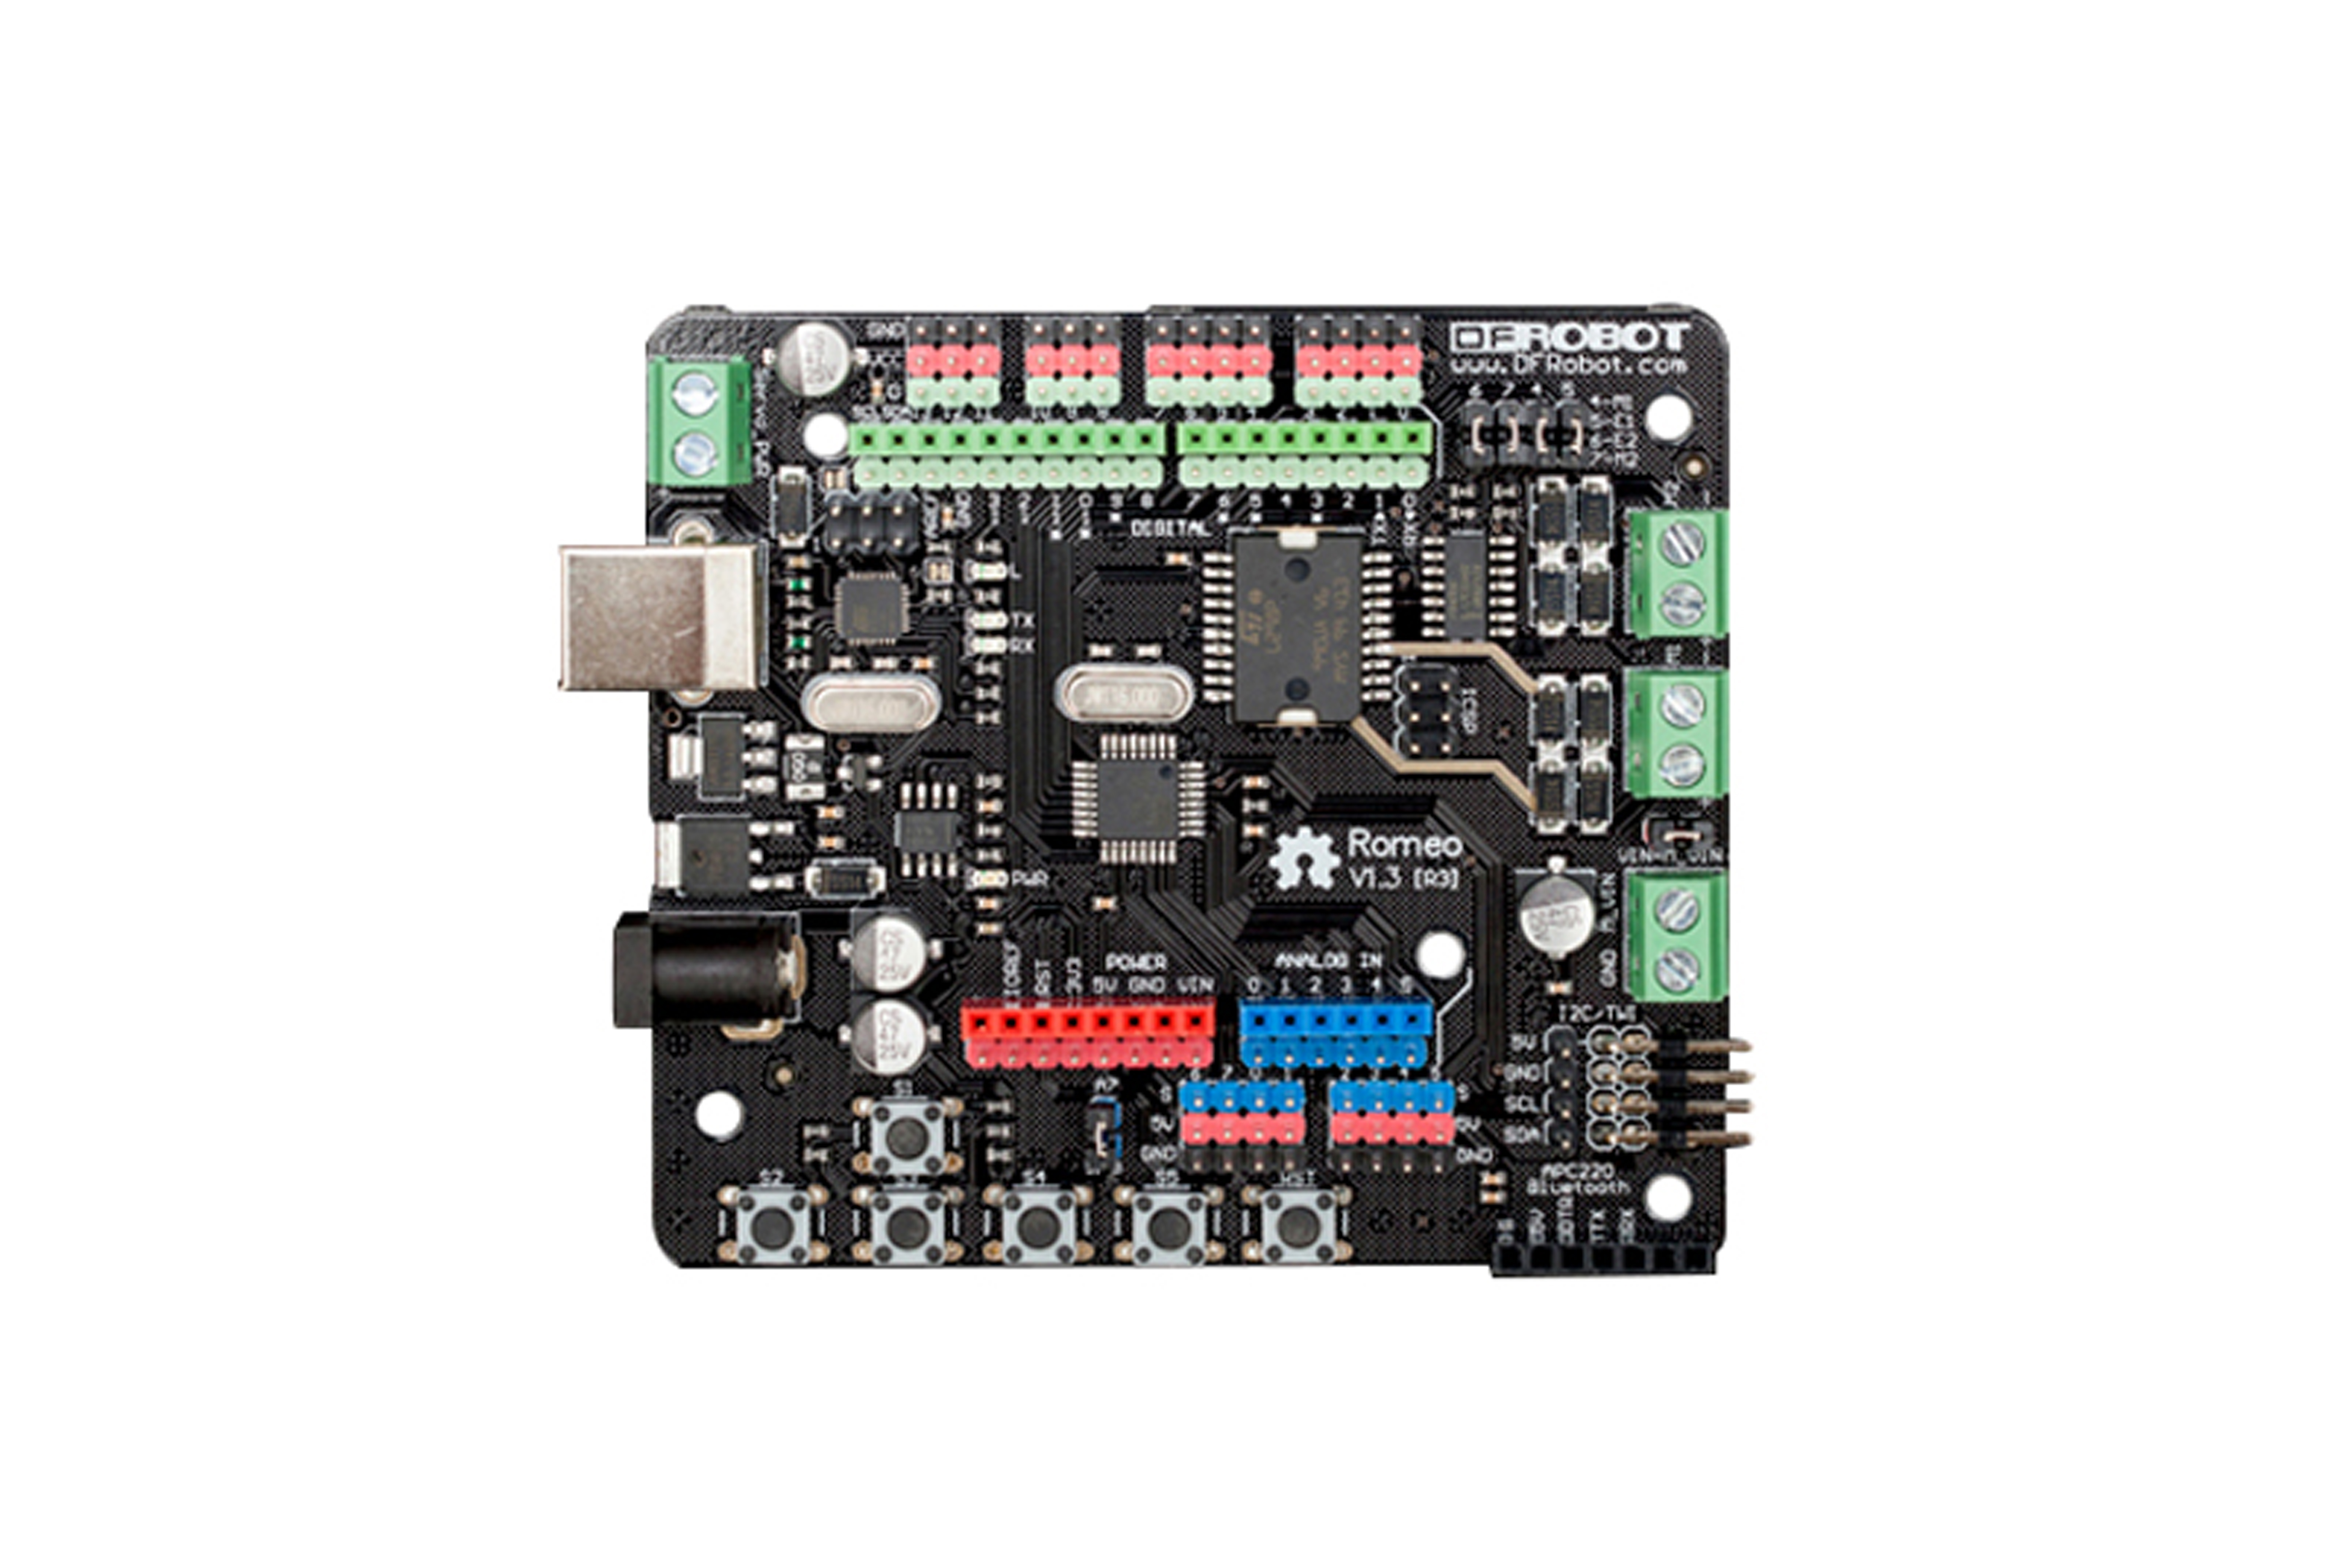 DFRobot Romeo Robotics Control Board Compatible With Arduino